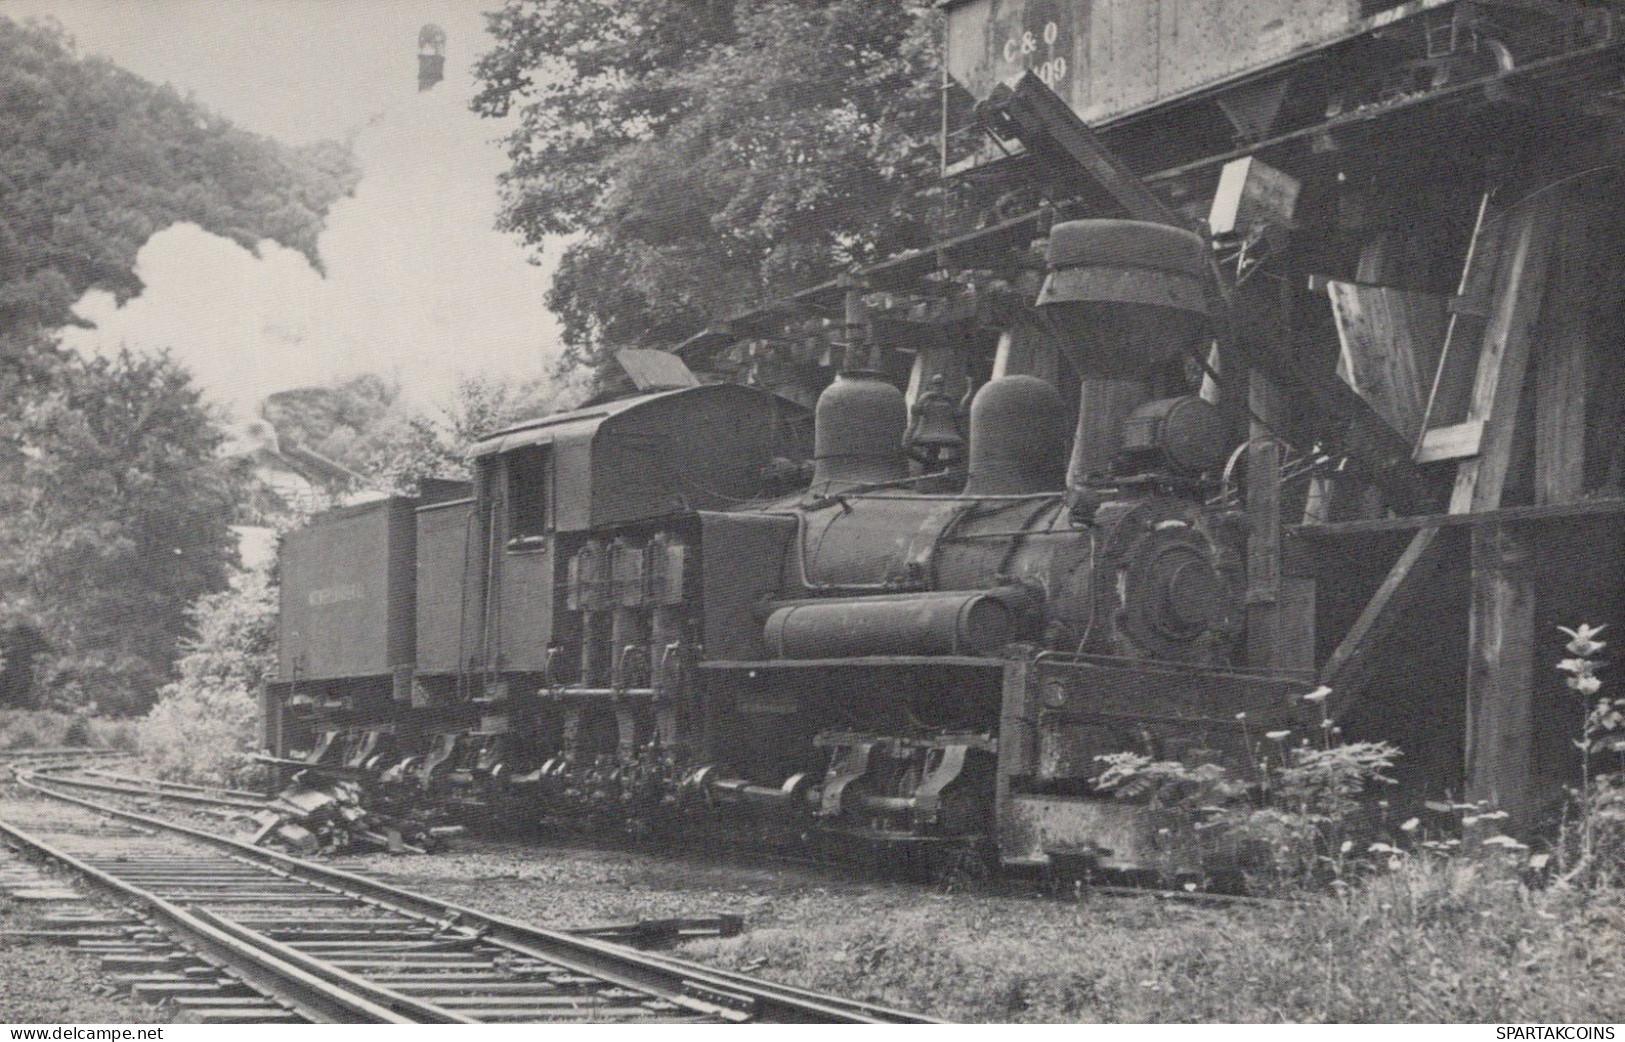 TREN TRANSPORTE Ferroviario Vintage Tarjeta Postal CPSMF #PAA418.ES - Trains